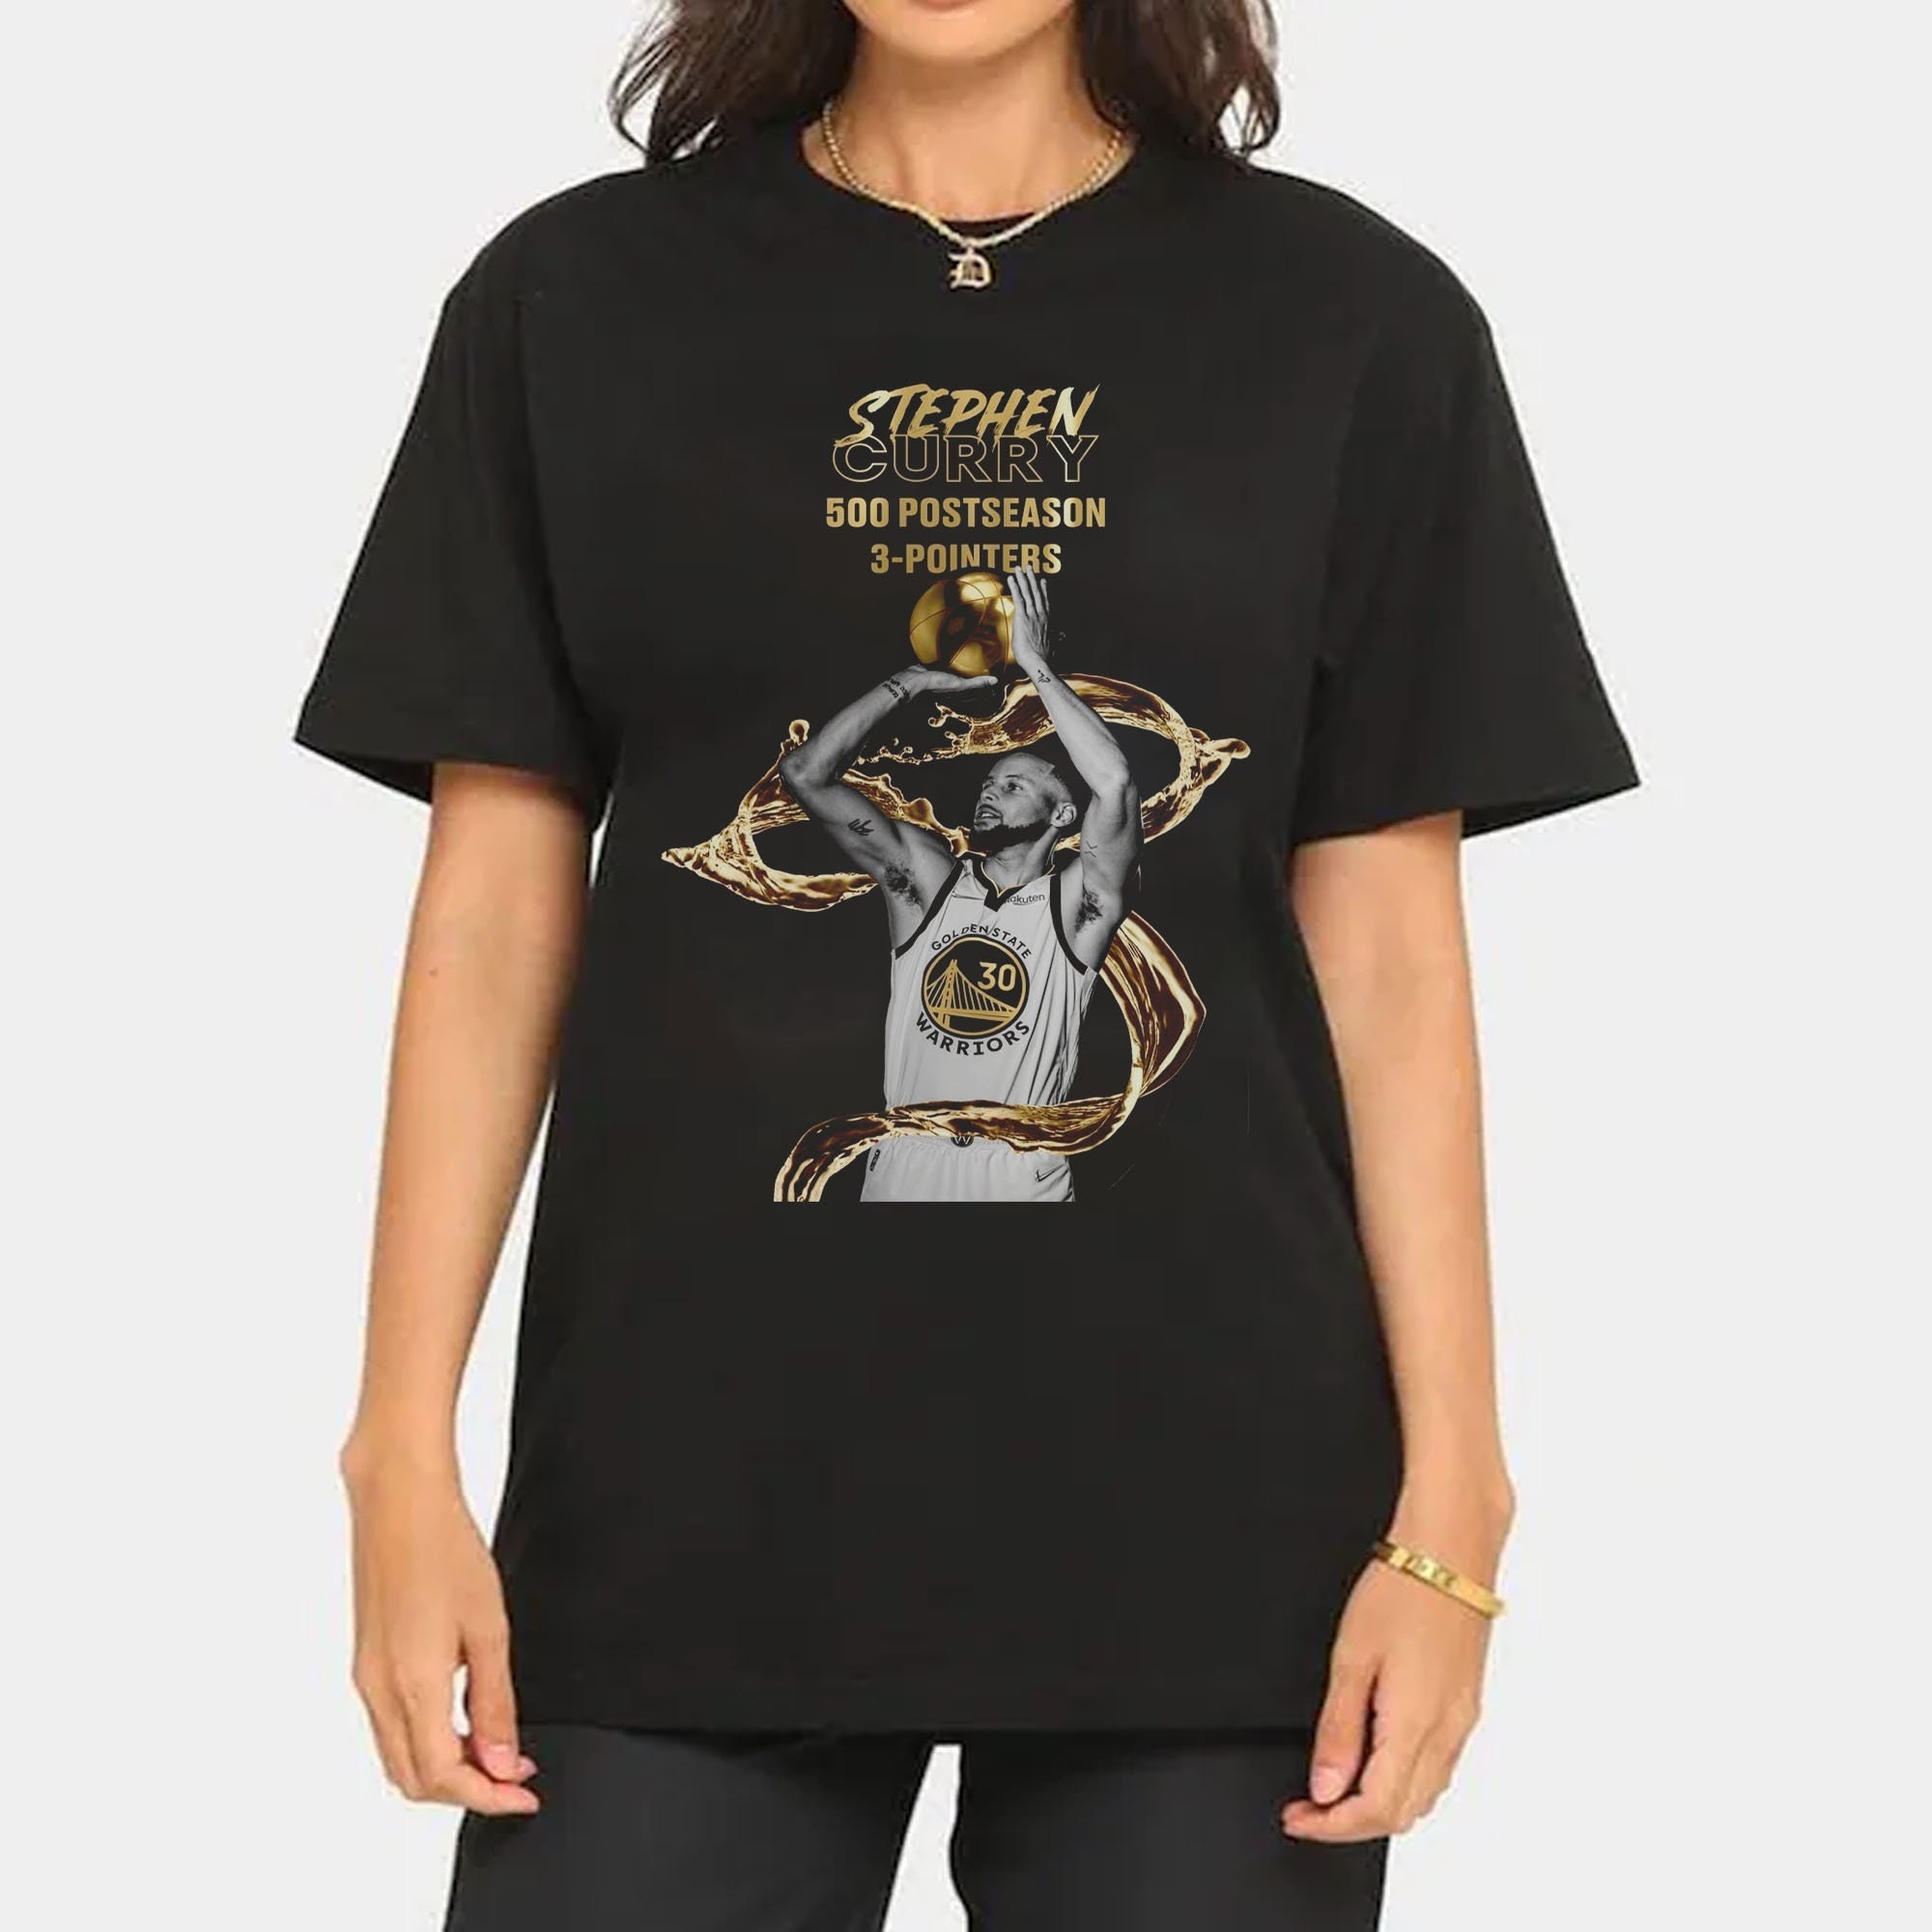 Stephen Curry Warriors Legend 500 Postseason 3 Pointers Unisex Shirt